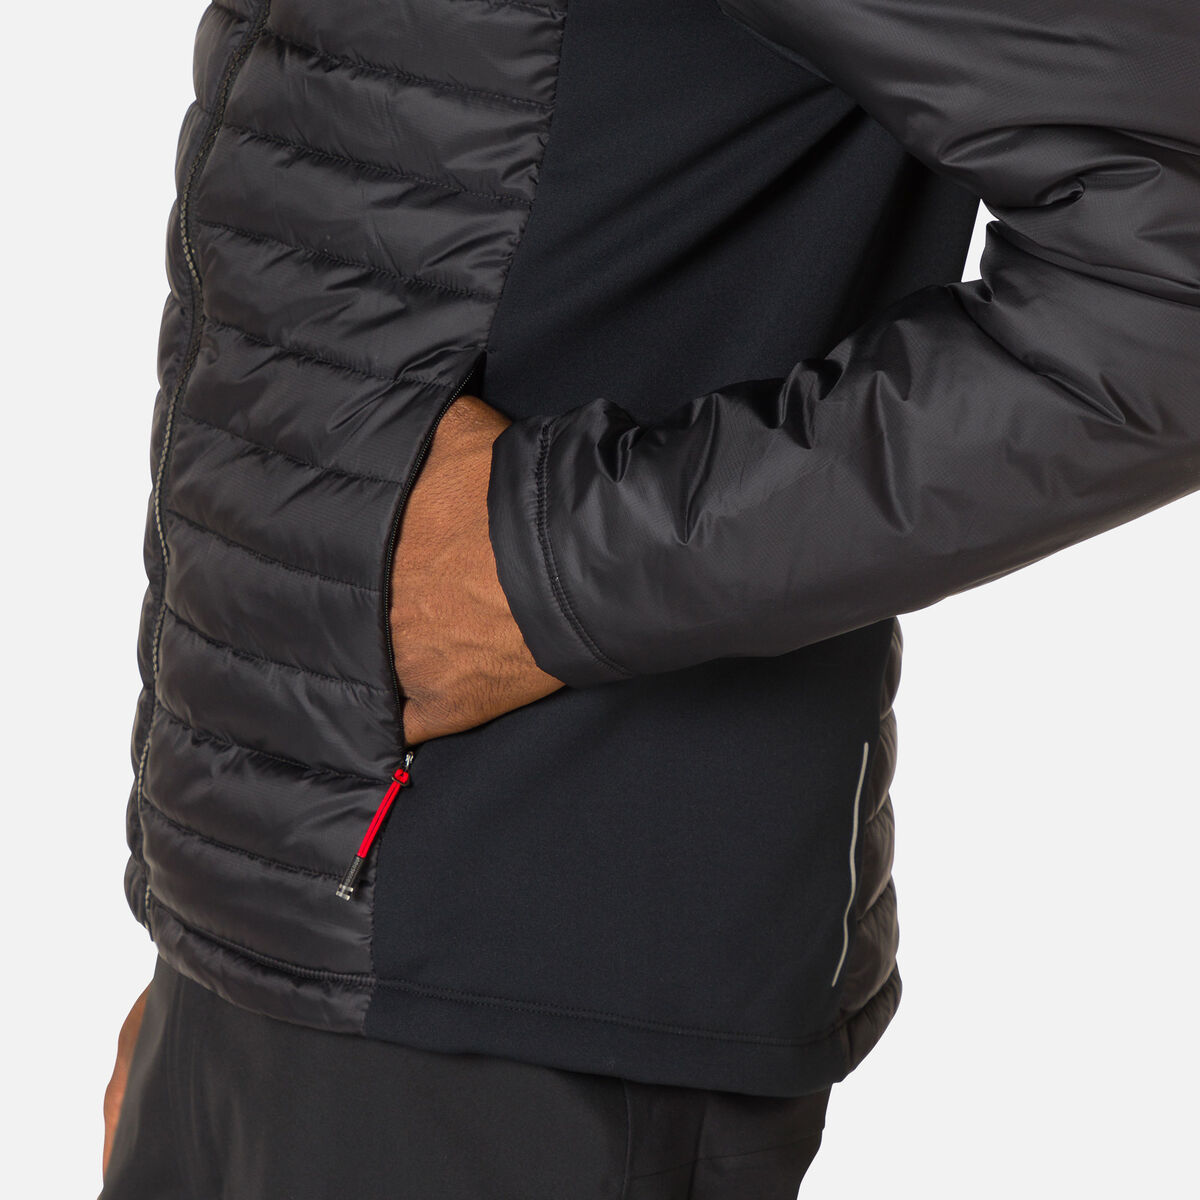 Men's SKPR Hybrid Light Jacket